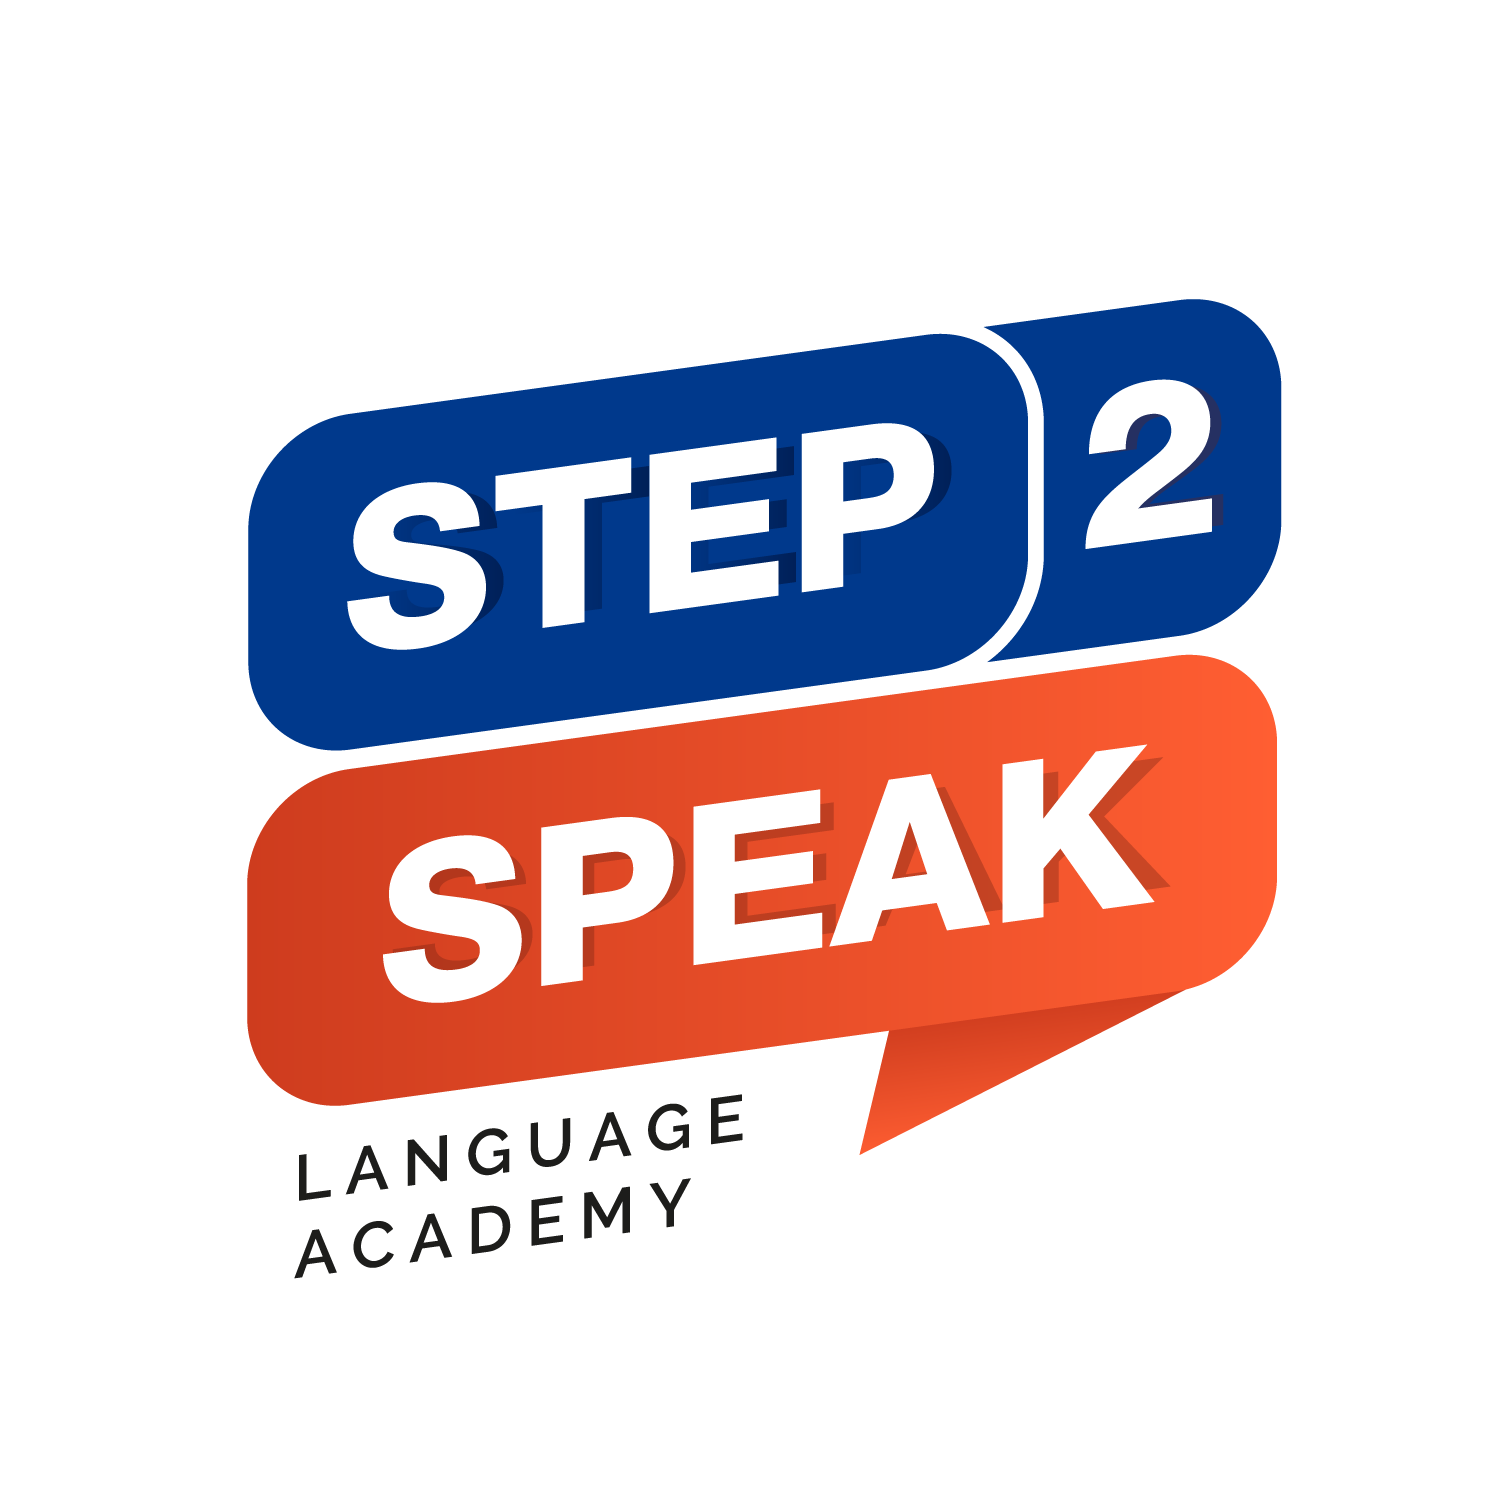 2step. Языковая Академия step2speak. Логотип Step 2 speak. Step2speak, Краснодар. Step2speak Саратов.